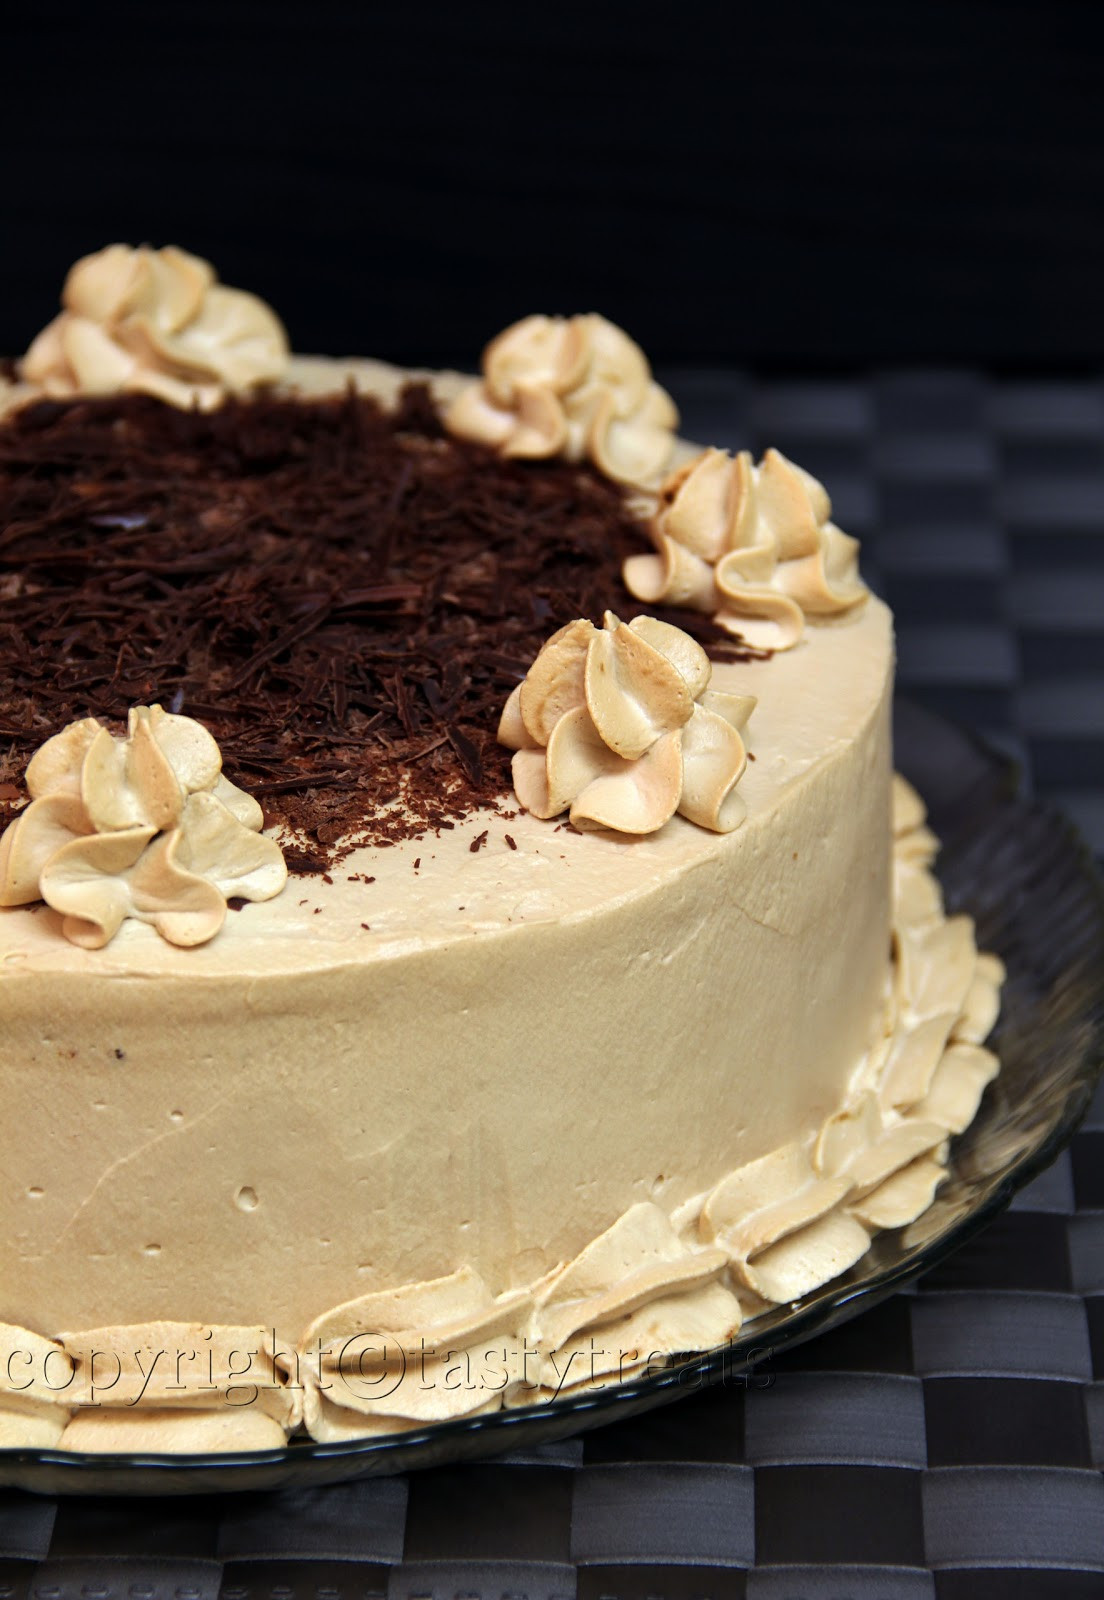 Best ideas about Tiramisu Birthday Cake
. Save or Pin Tasty Treats Another Birthday and A Tiramisu Cake Now.